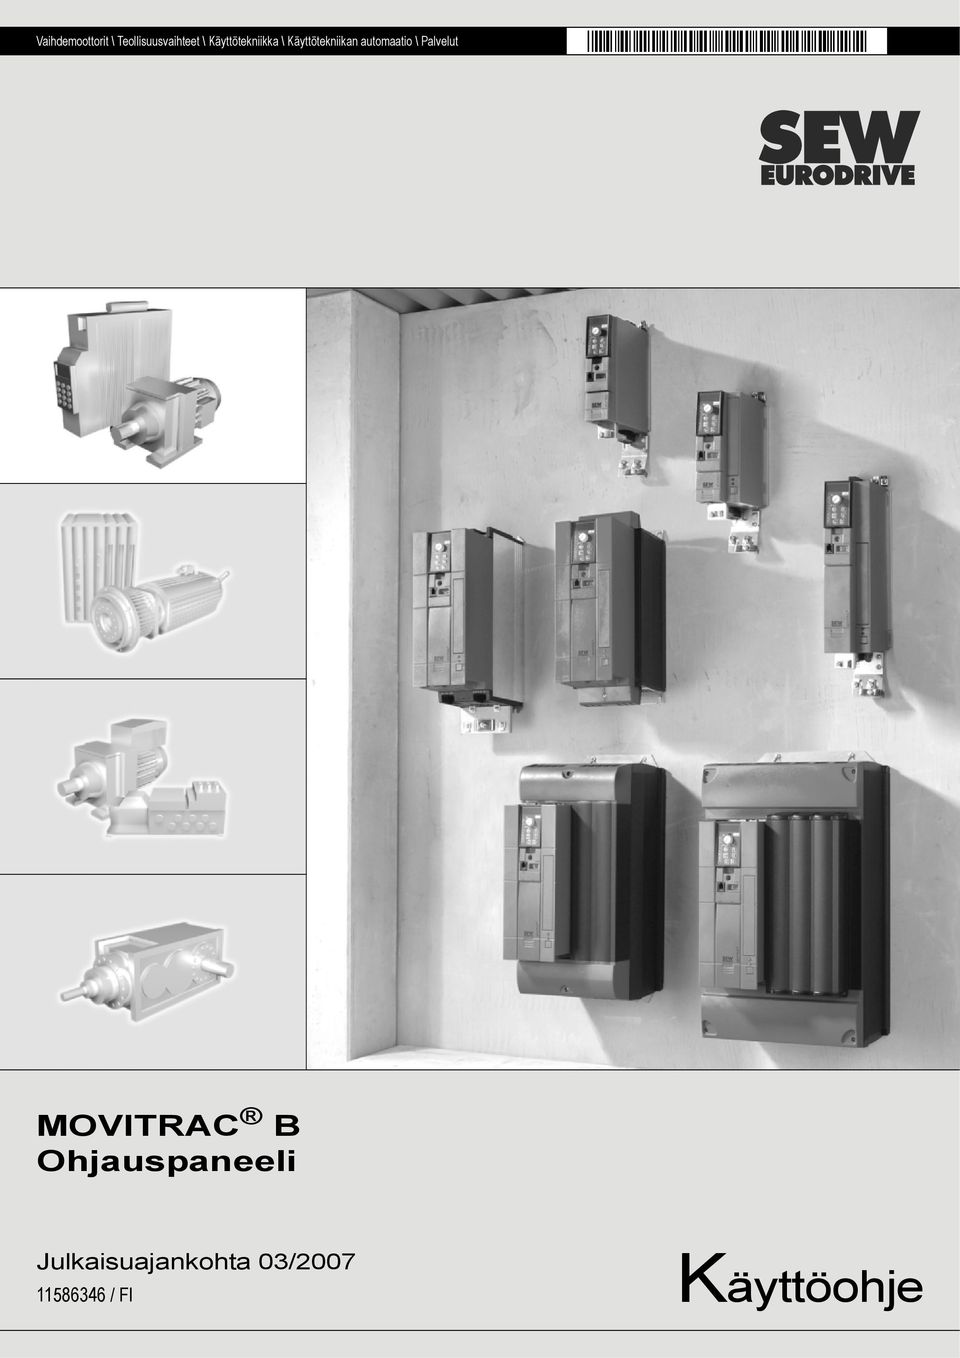 automaatio \ Palvelut MOVTRAC B